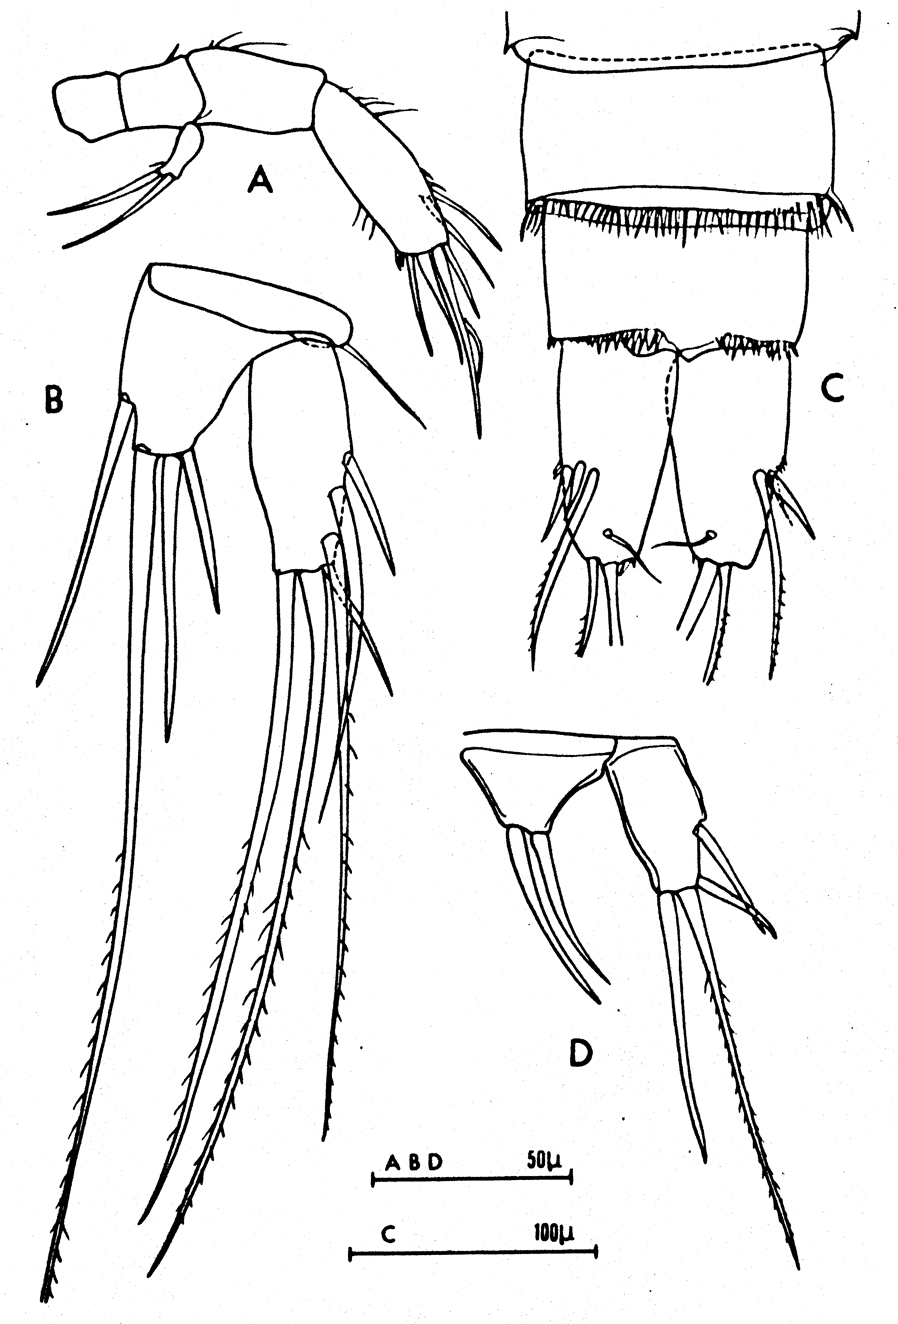 Species Distioculus minor - Plate 6 of morphological figures